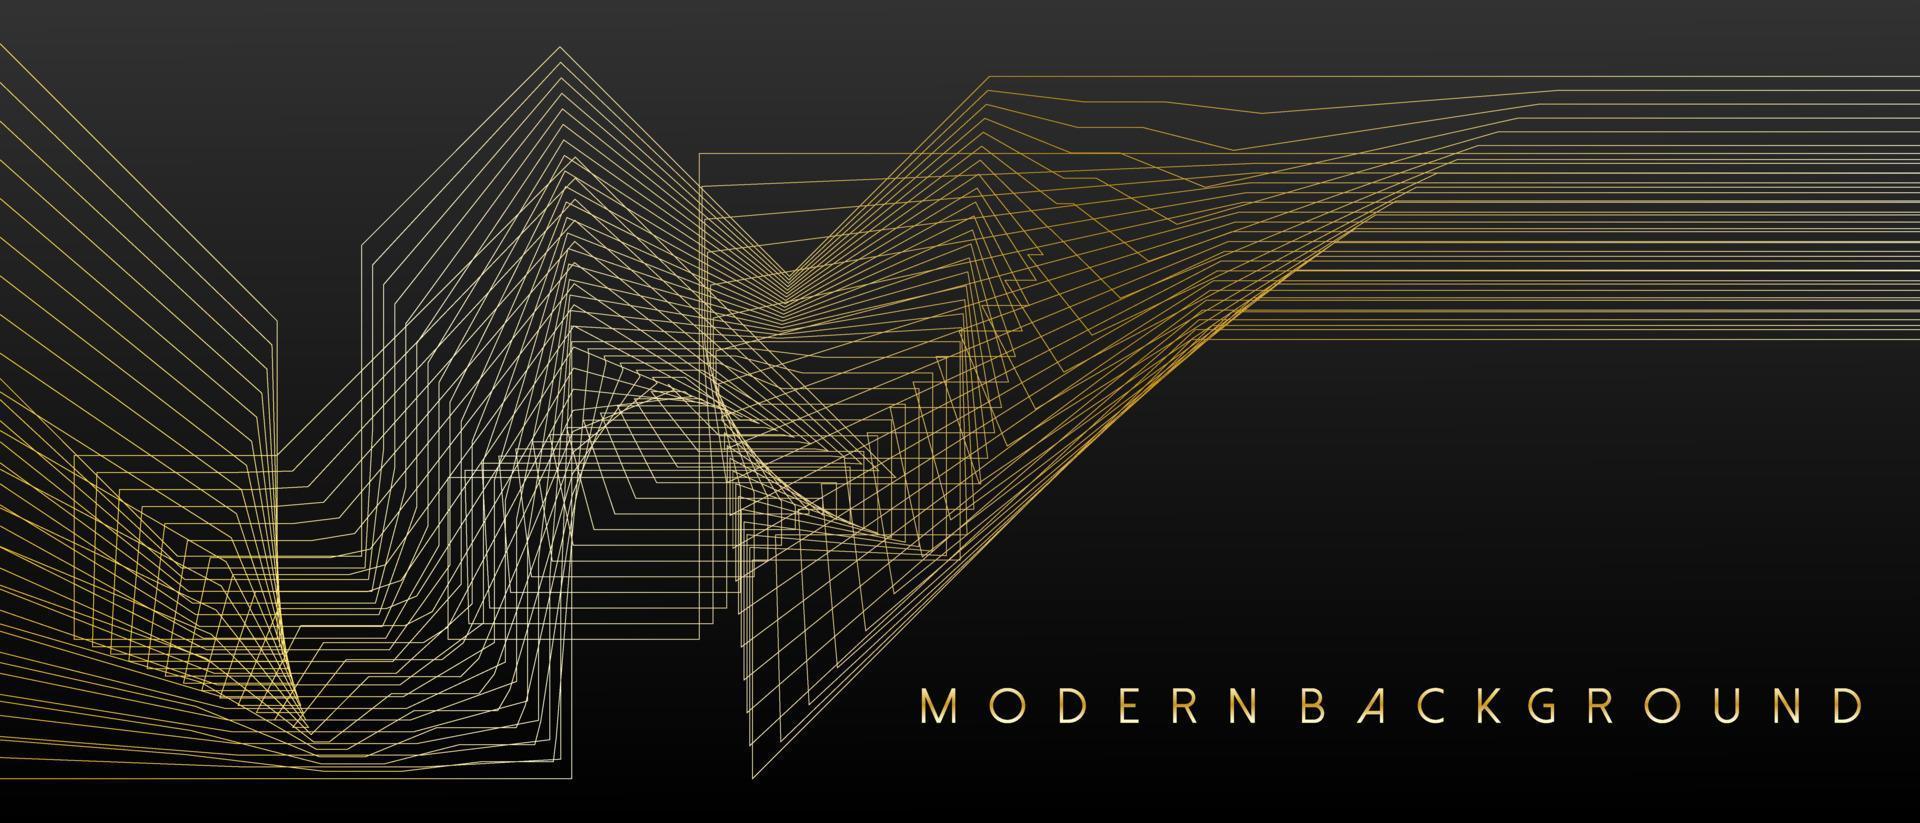 modern bakgrund med gyllene abstrakt geometrisk och vågig rader design. vektor illustration